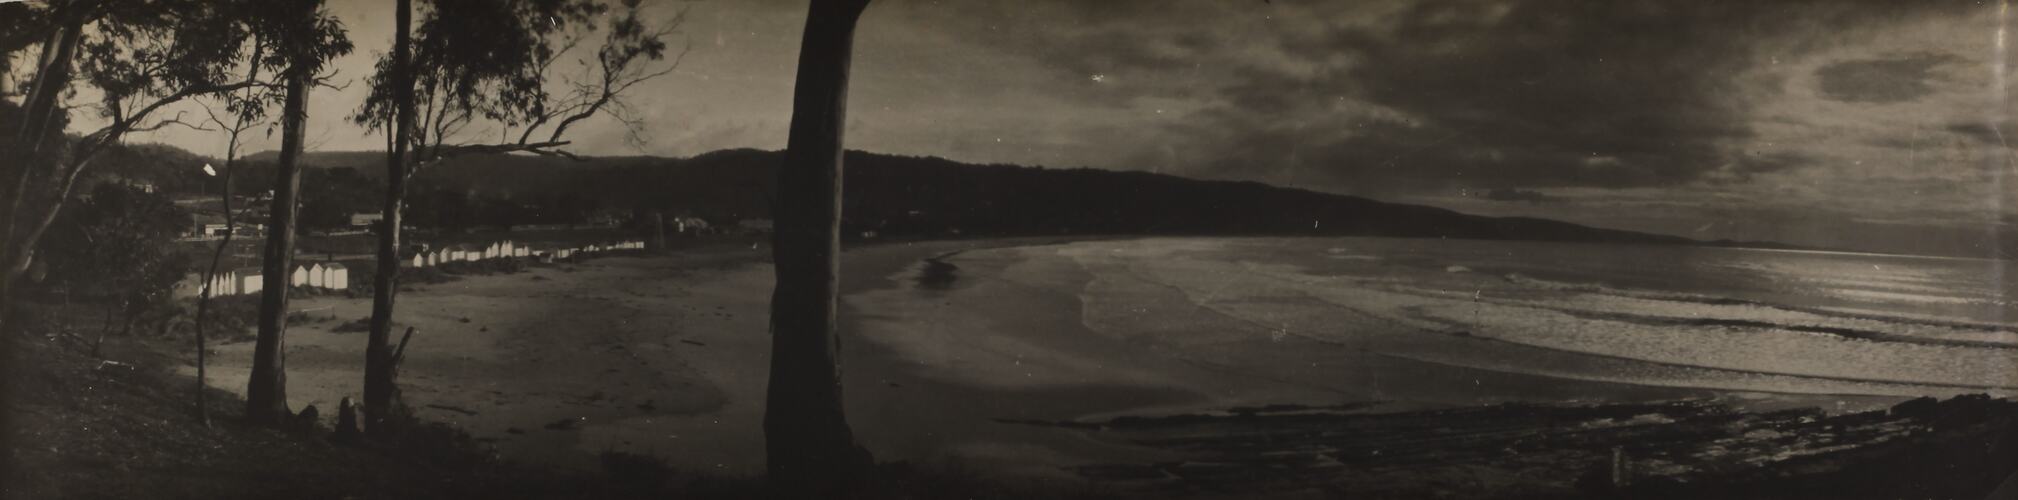 Photograph - Coastal Landscape, Lorne District, Victoria, circa 1920s